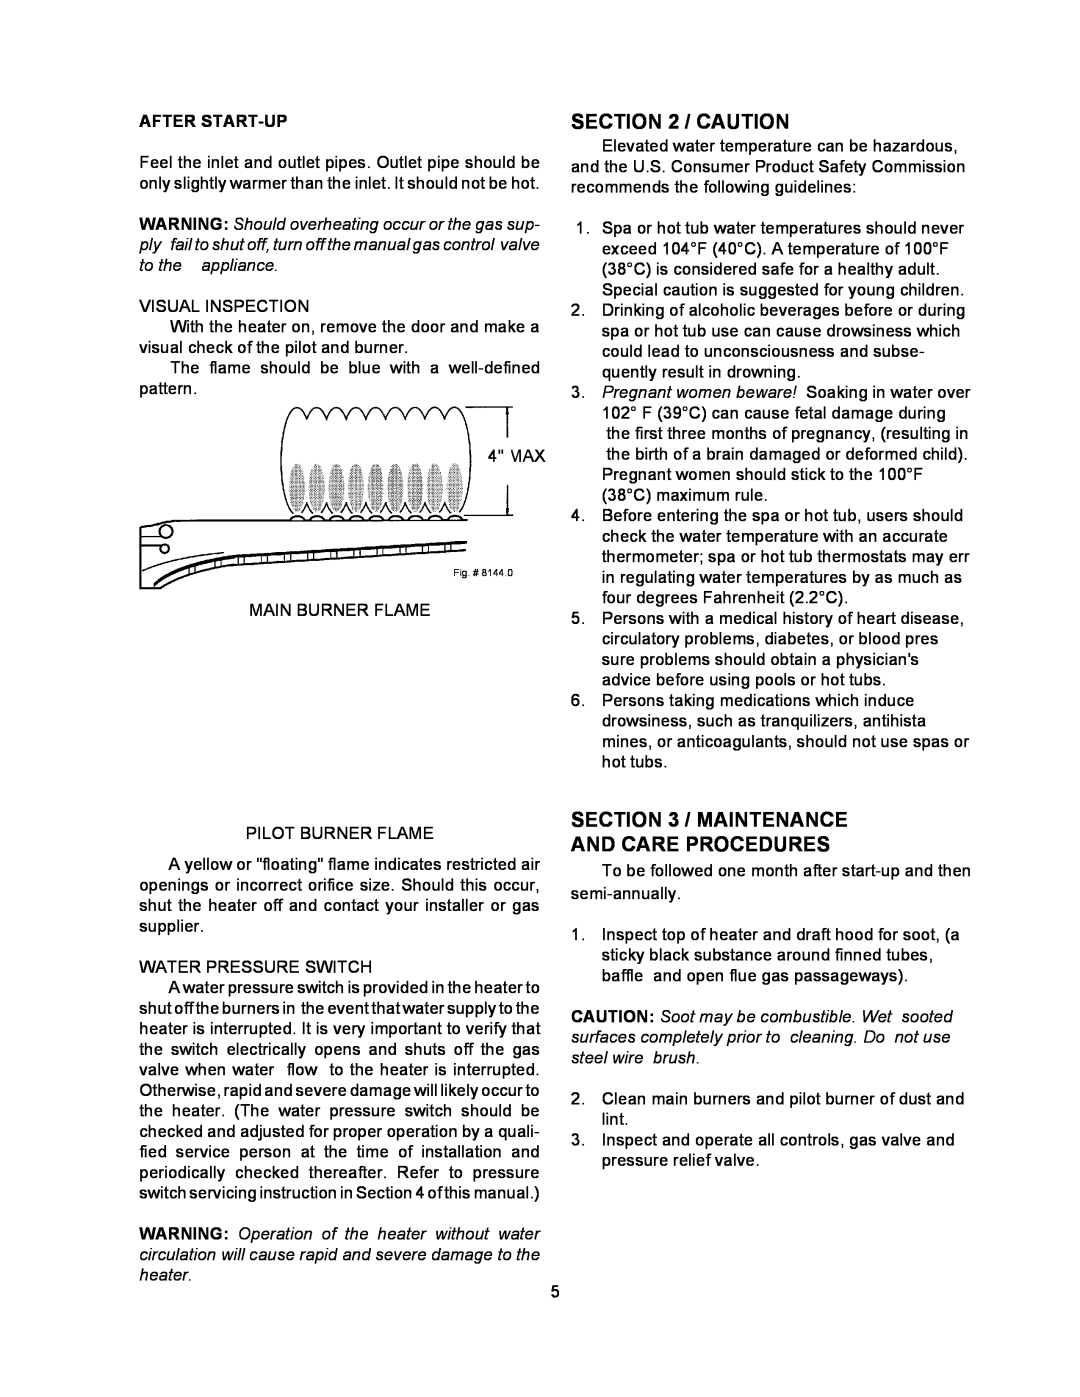 Raypak 055B installation instructions Caution, Maintenance And Care Procedures 